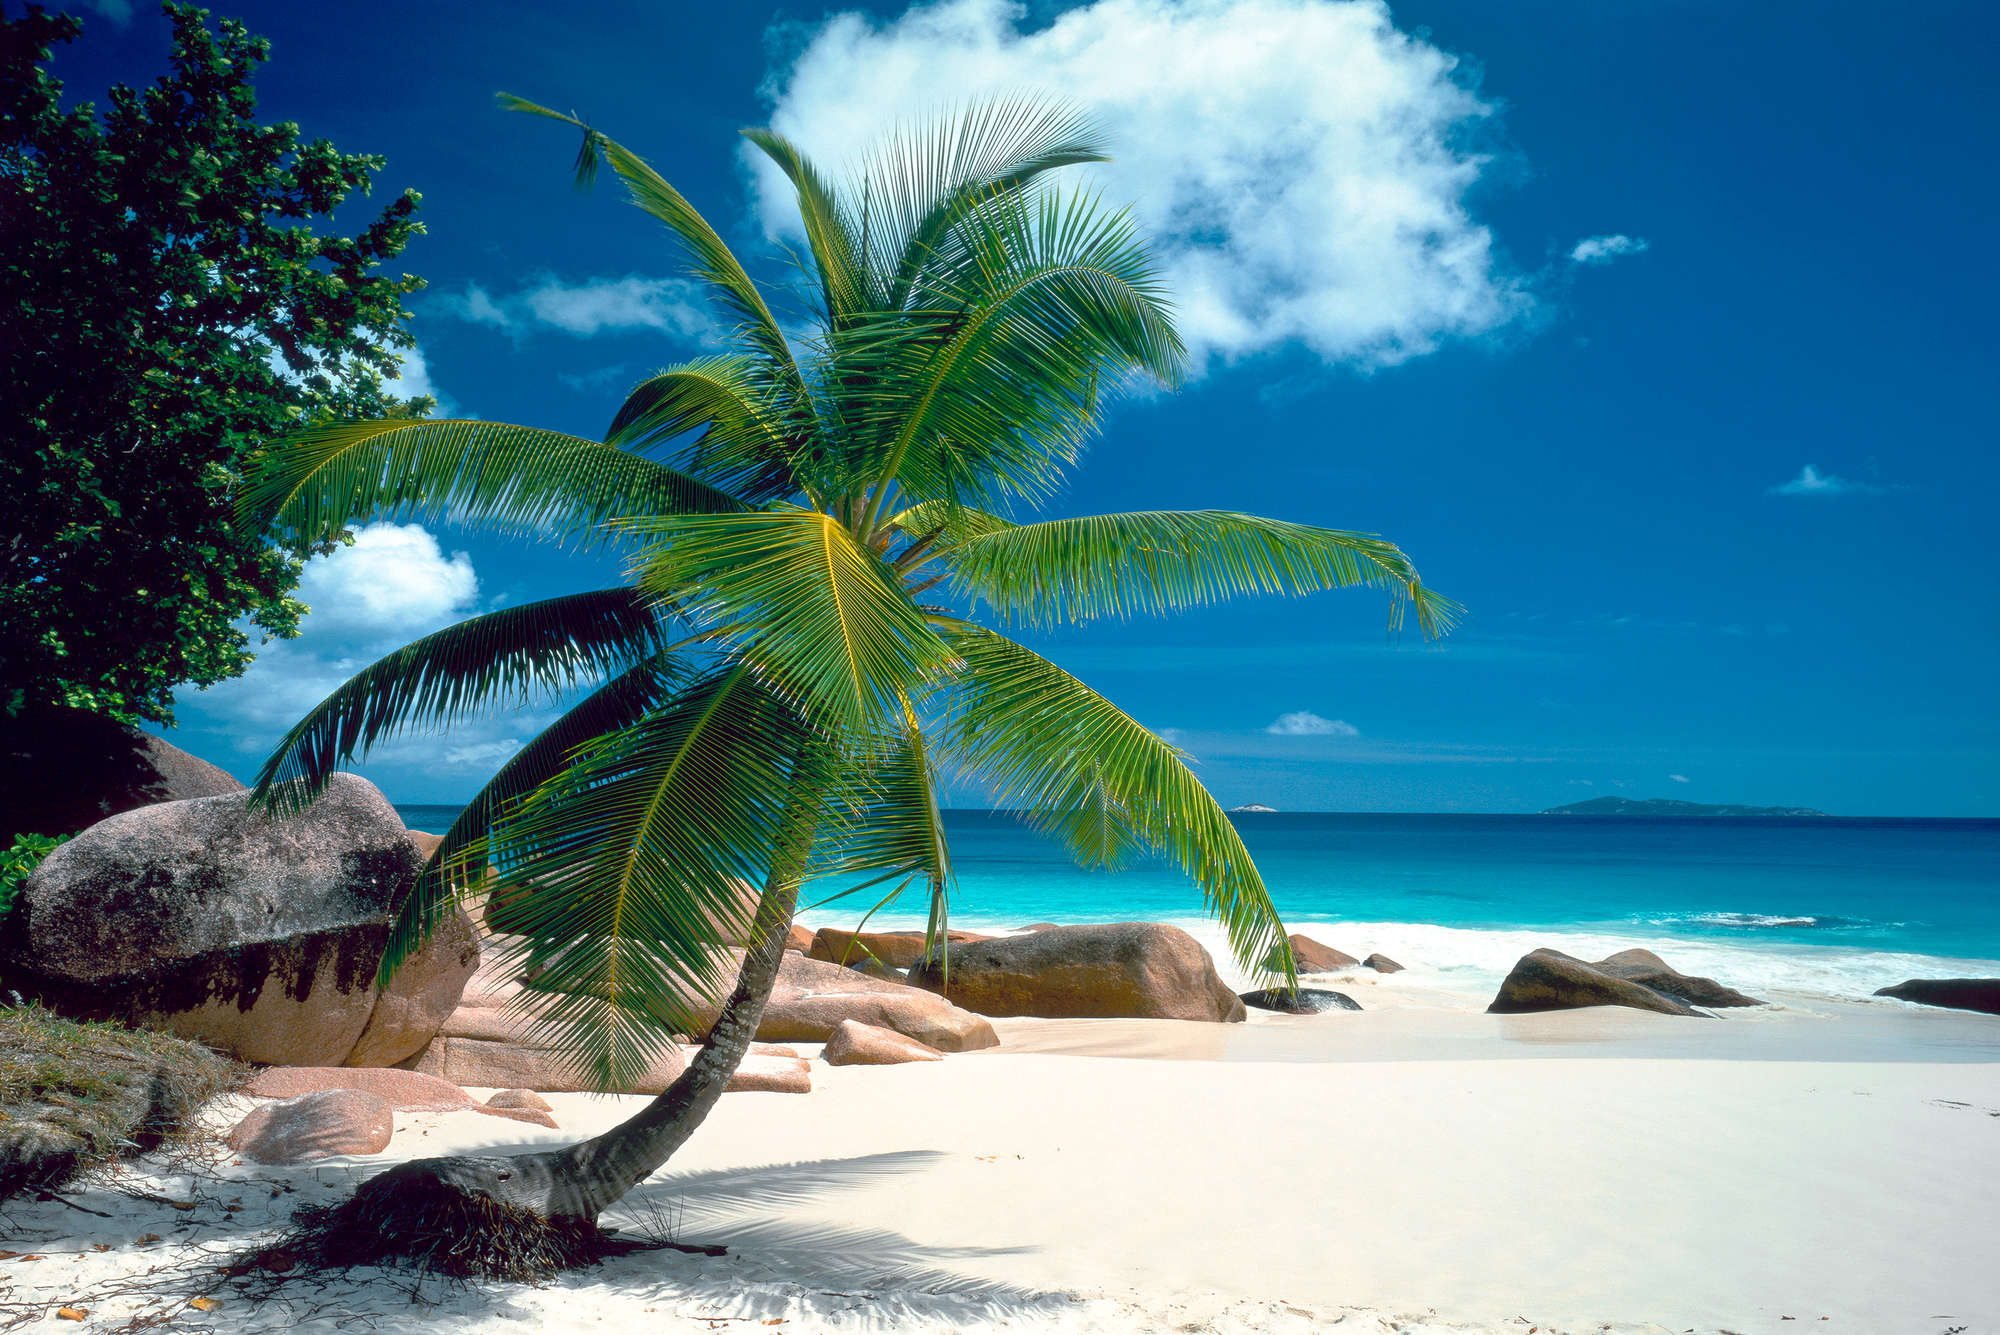             Papel pintado de playa con palmeras y mar azul sobre vellón liso mate
        